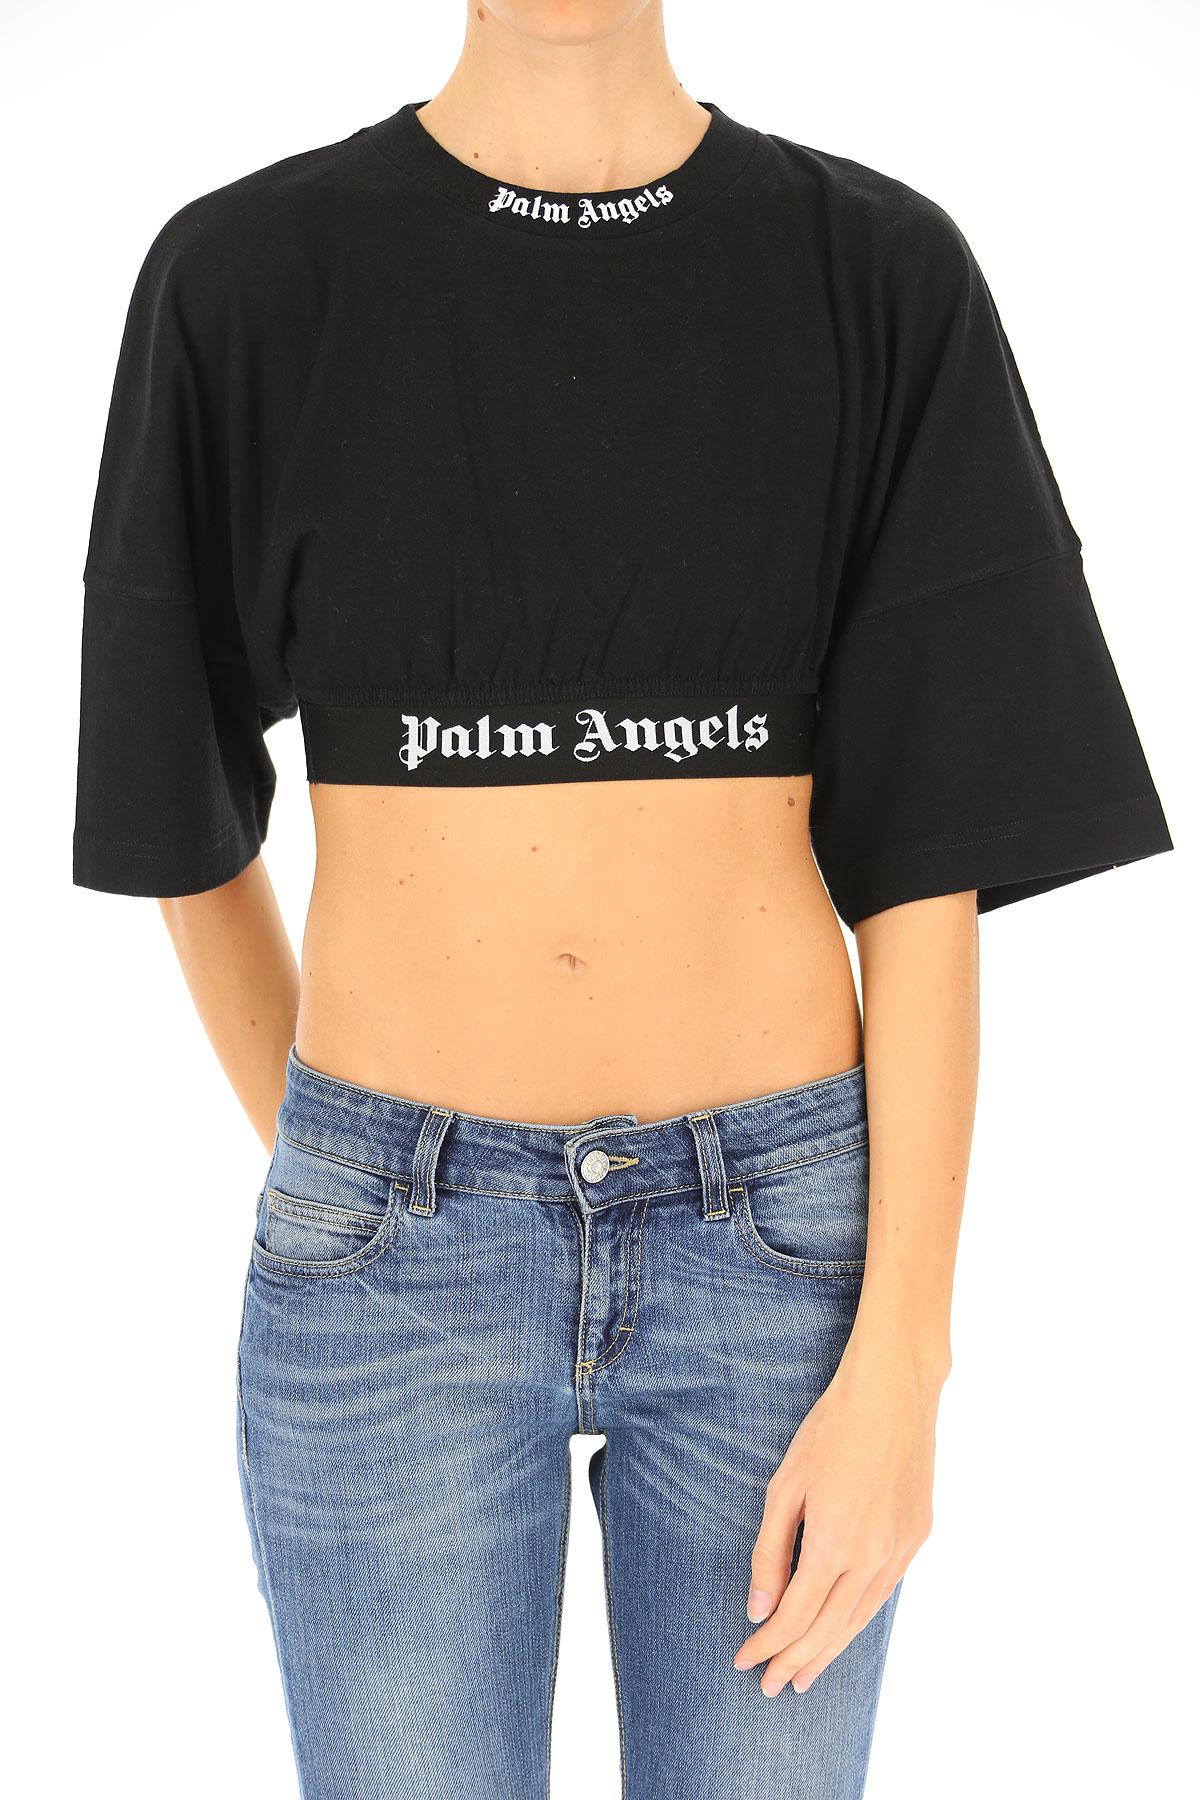 palm angels shirt womens